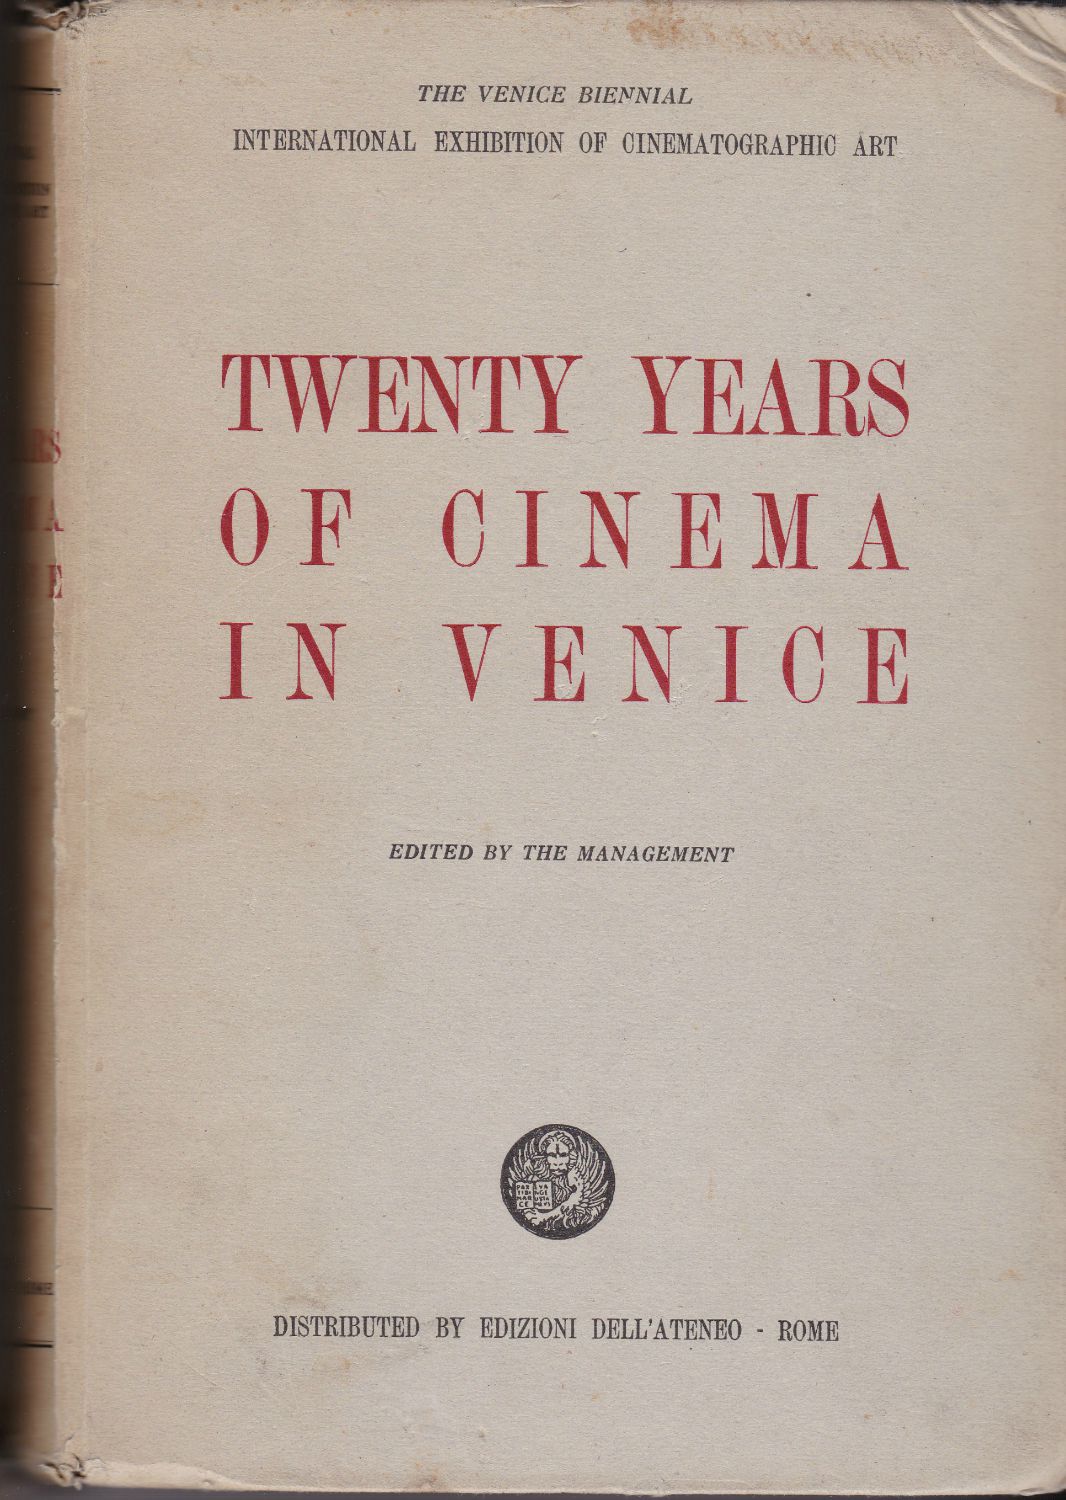 Twenty years of cinema in Venice.